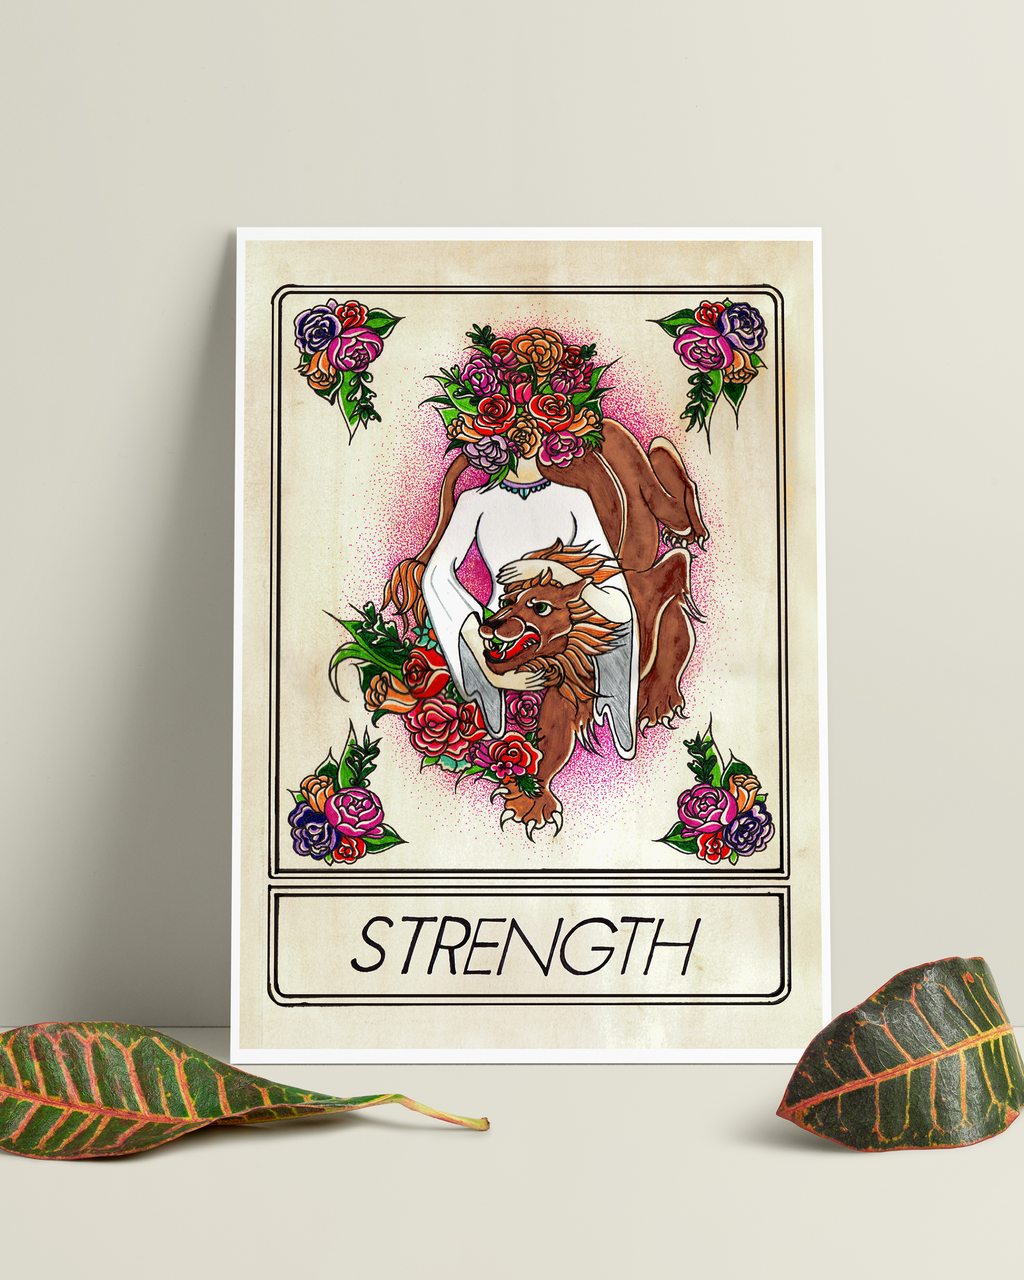 Strength - Poster Print